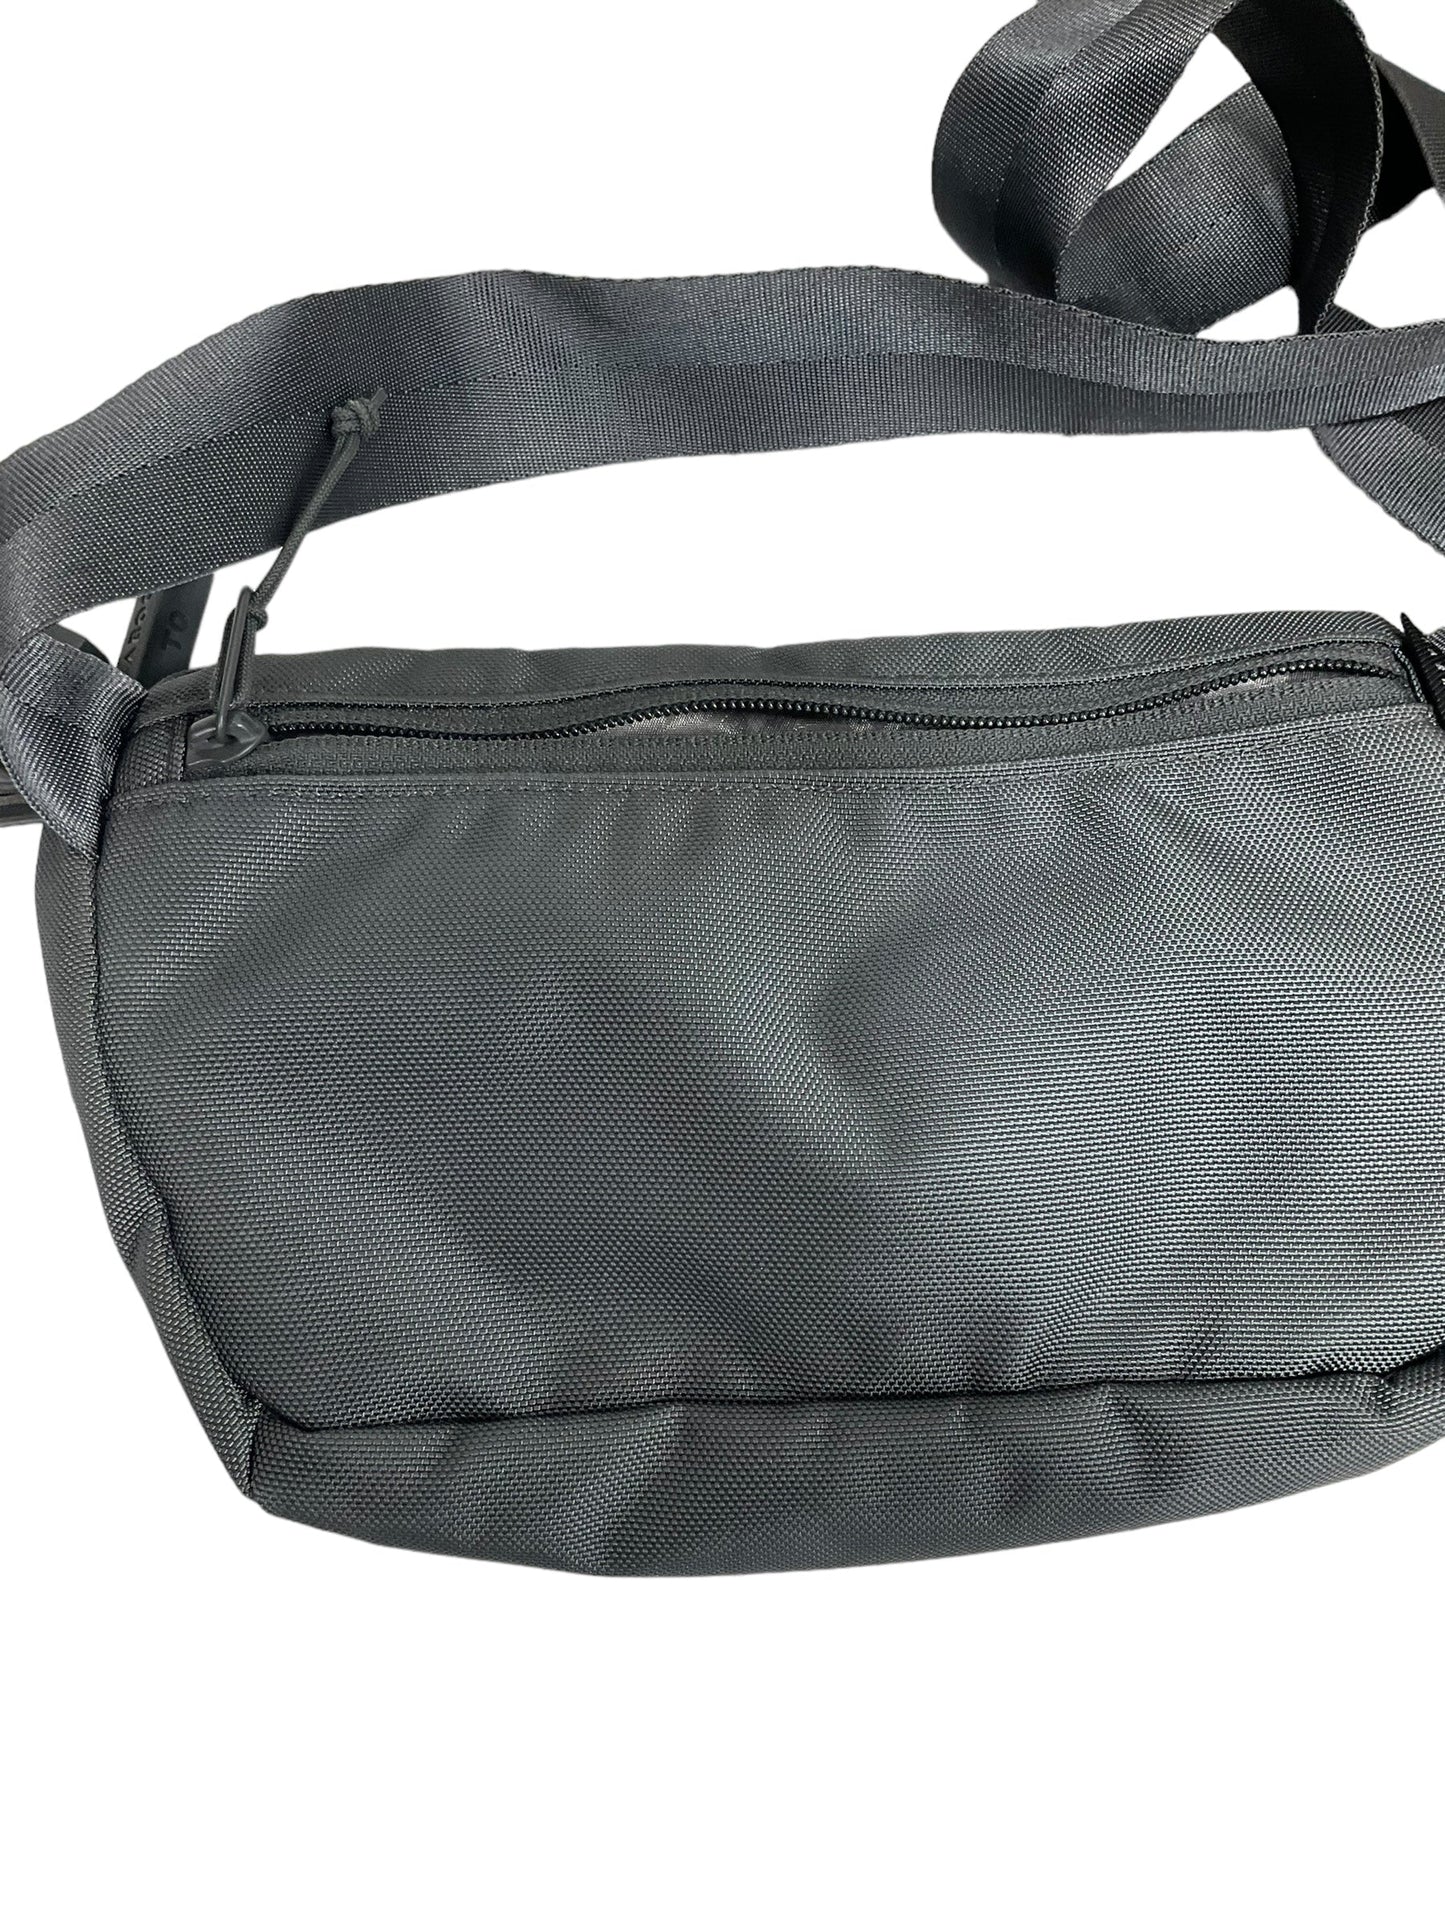 Belt Bag Clothes Mentor, Size Small